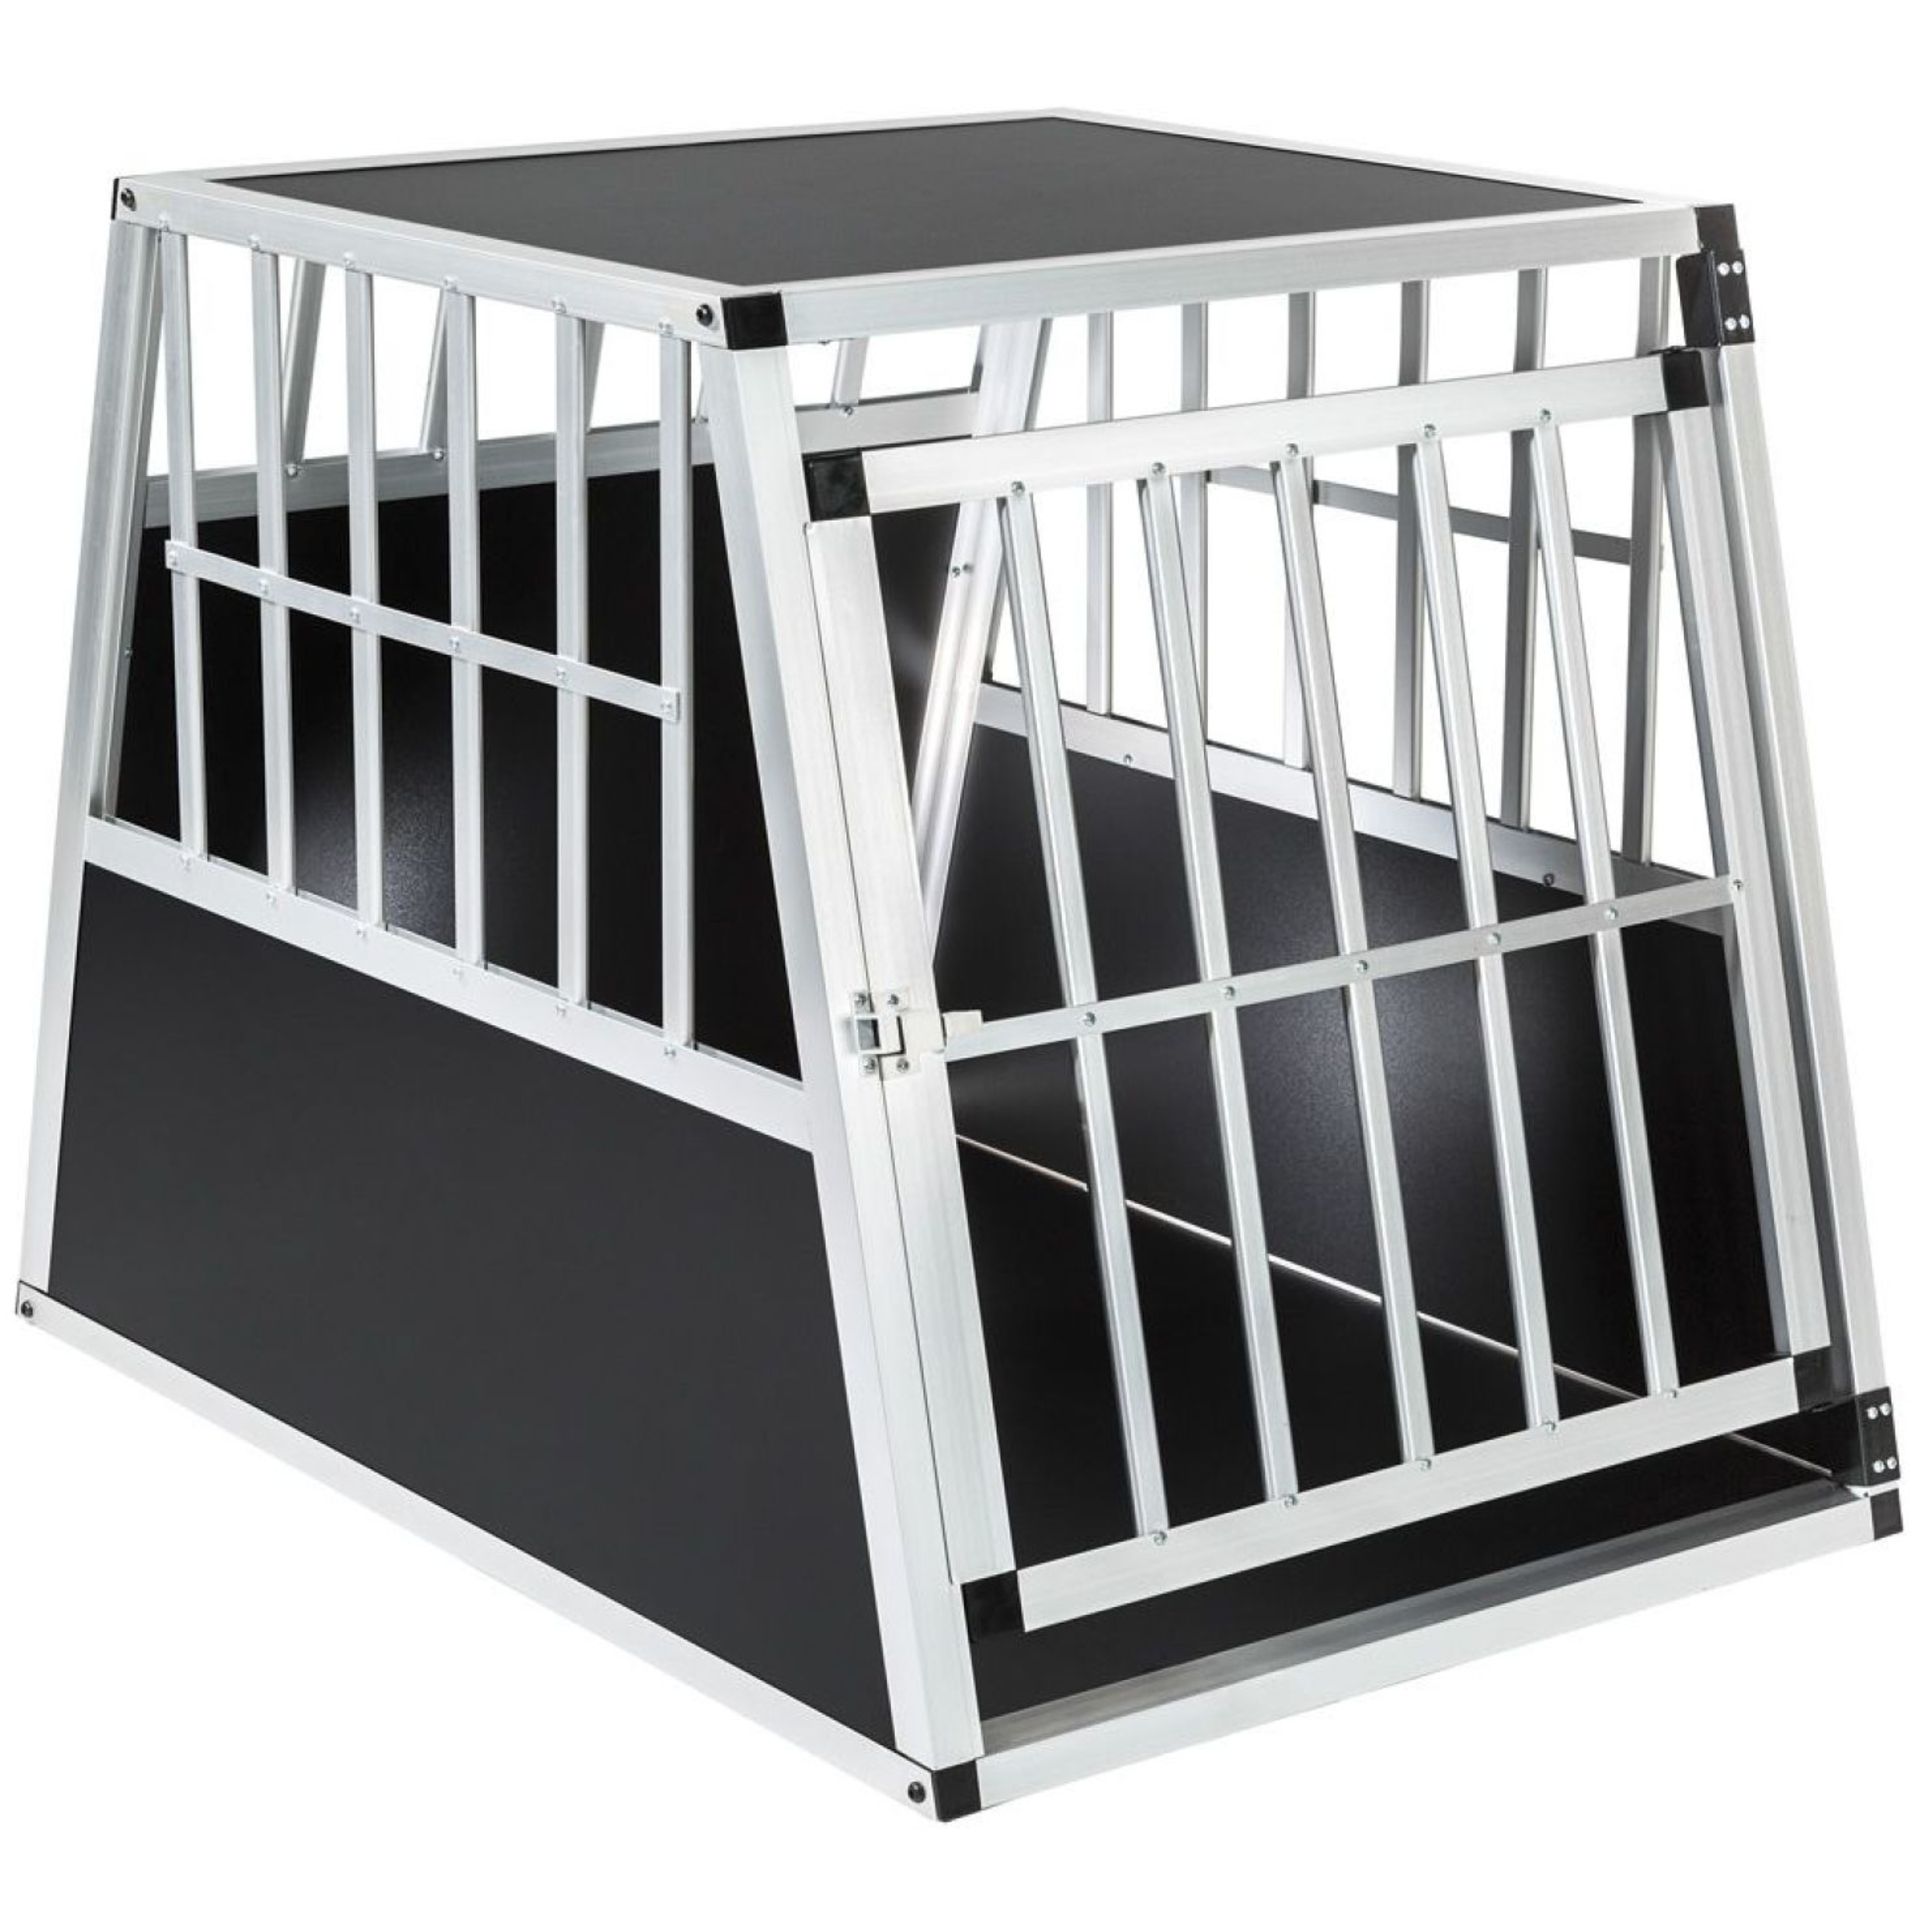 Tectake - Dog Crate Standard Shape Single Black - Boxed. RRP £83.99